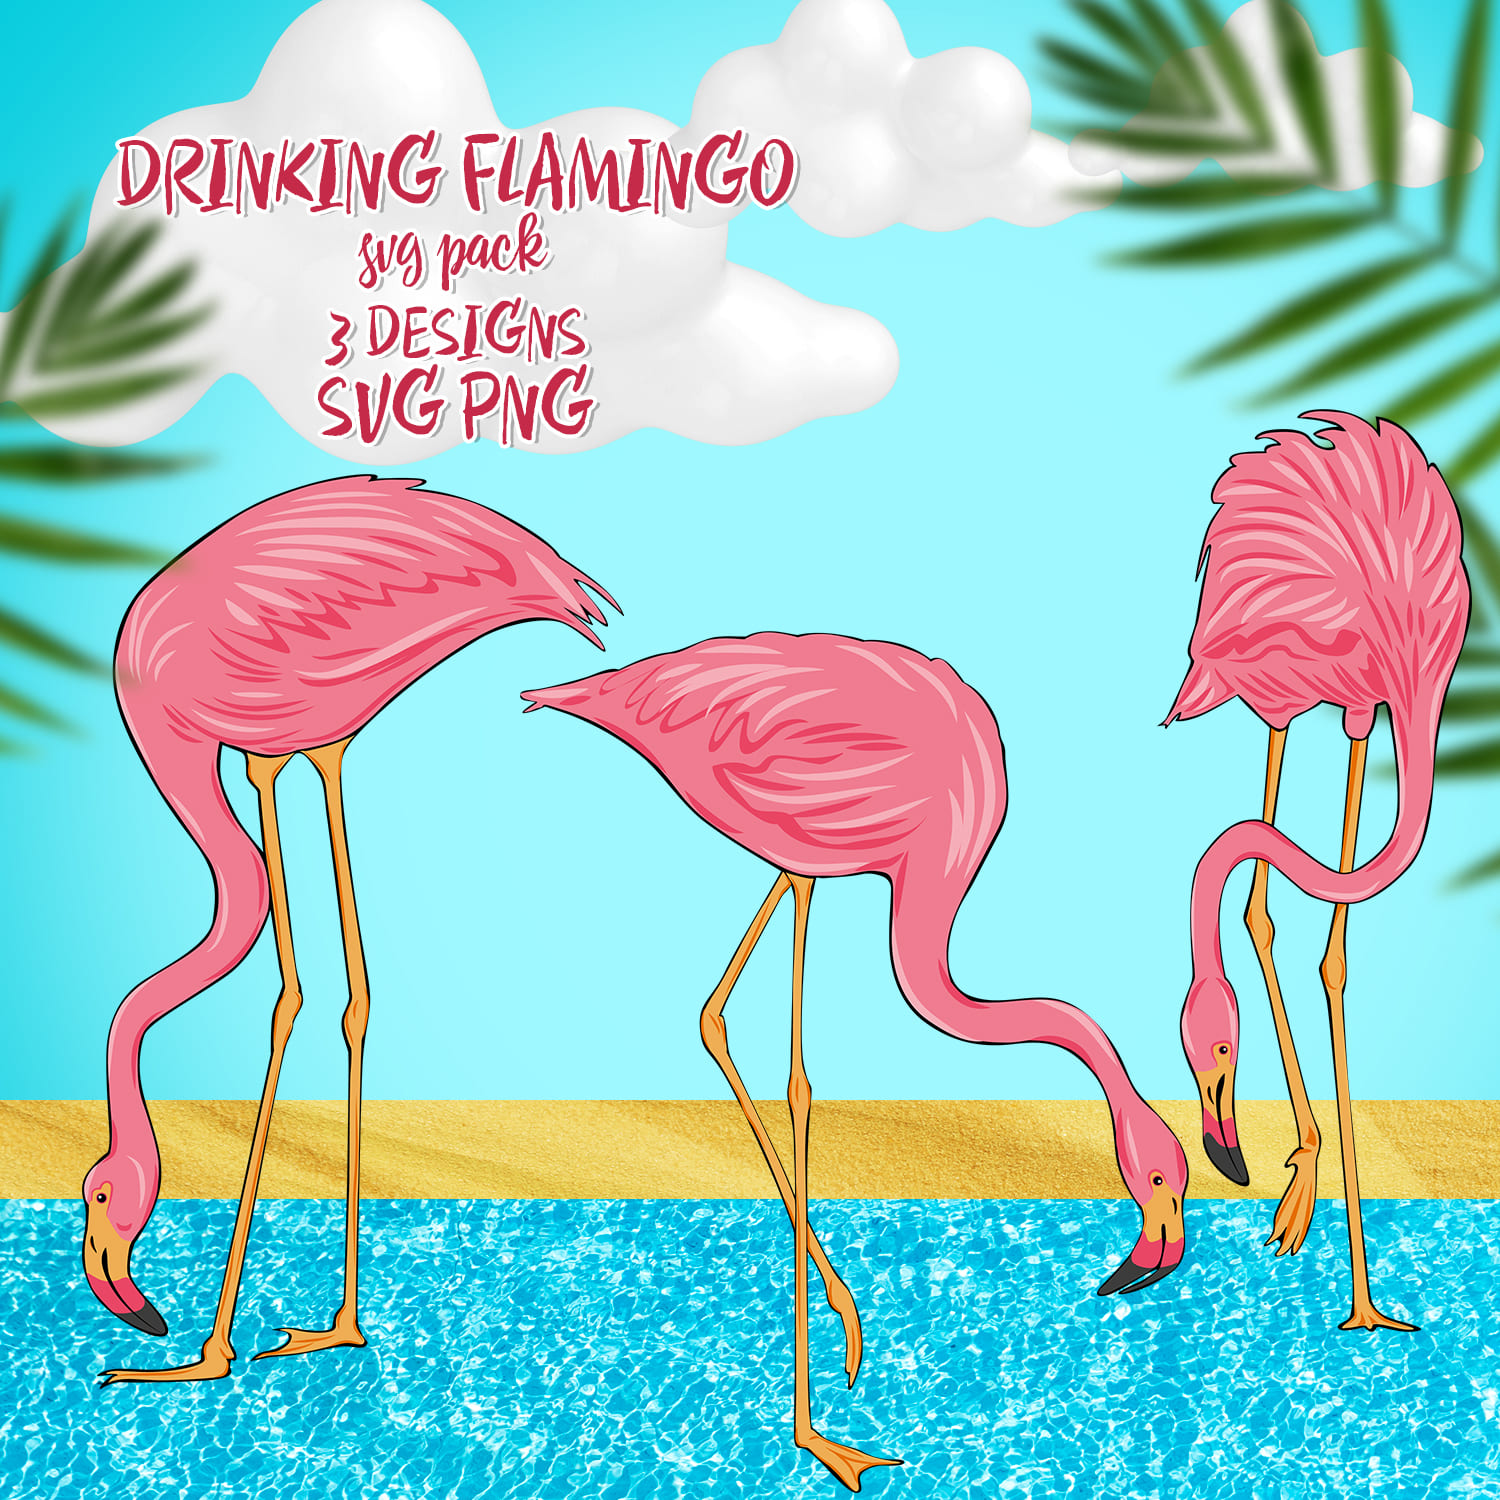 drinking flamingo svg pack.